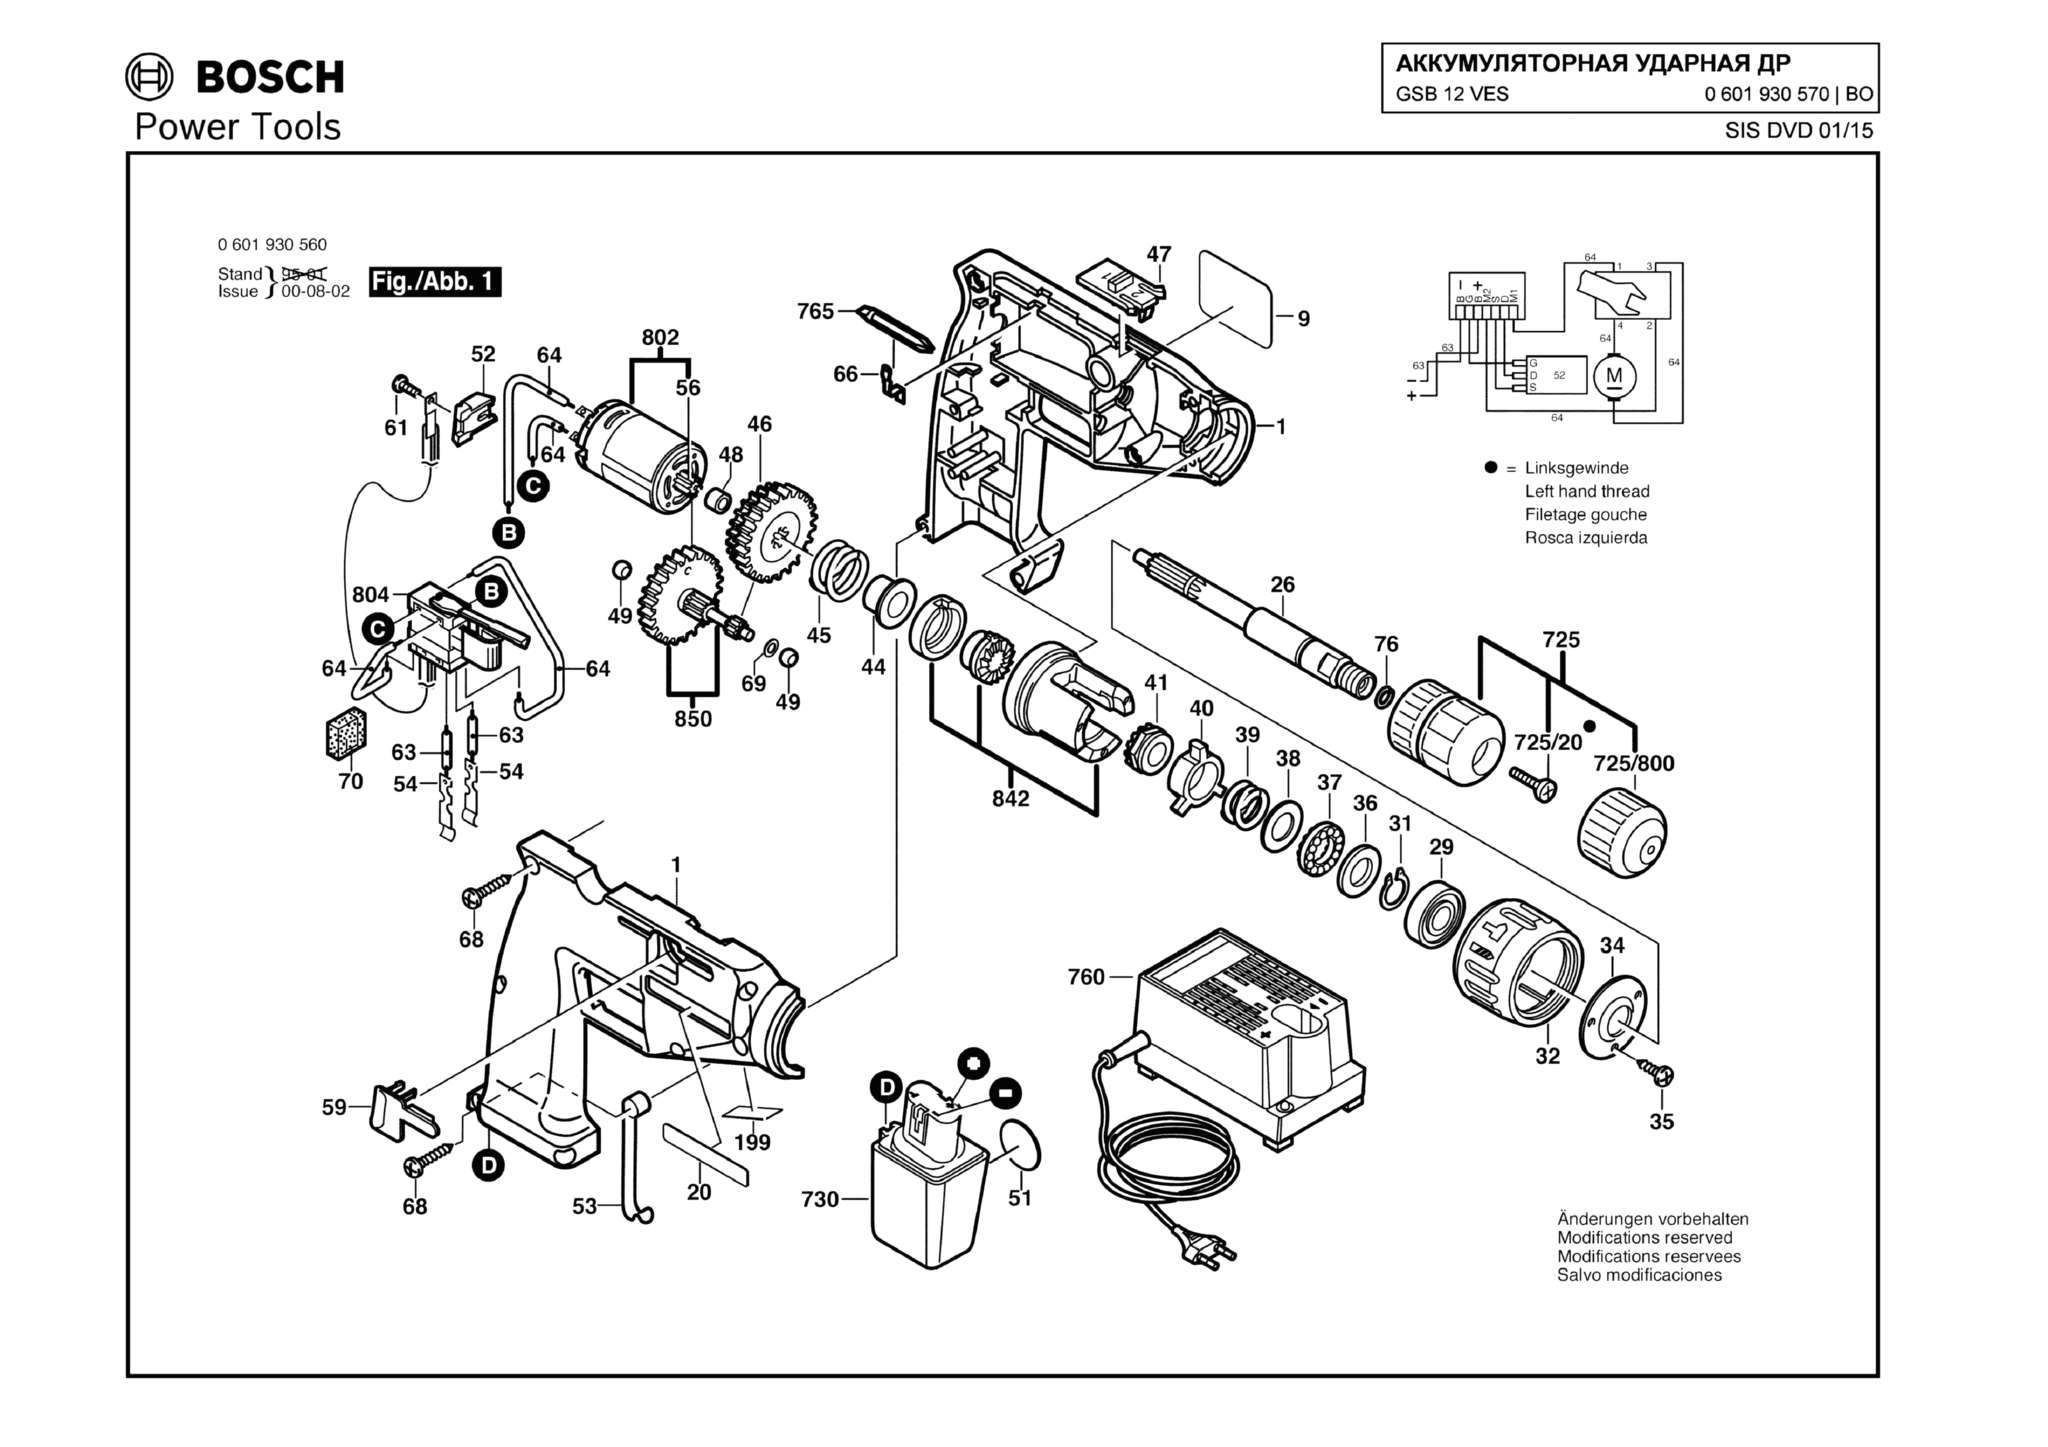 Запчасти, схема и деталировка Bosch GSB 12 VES (ТИП 0601930570)